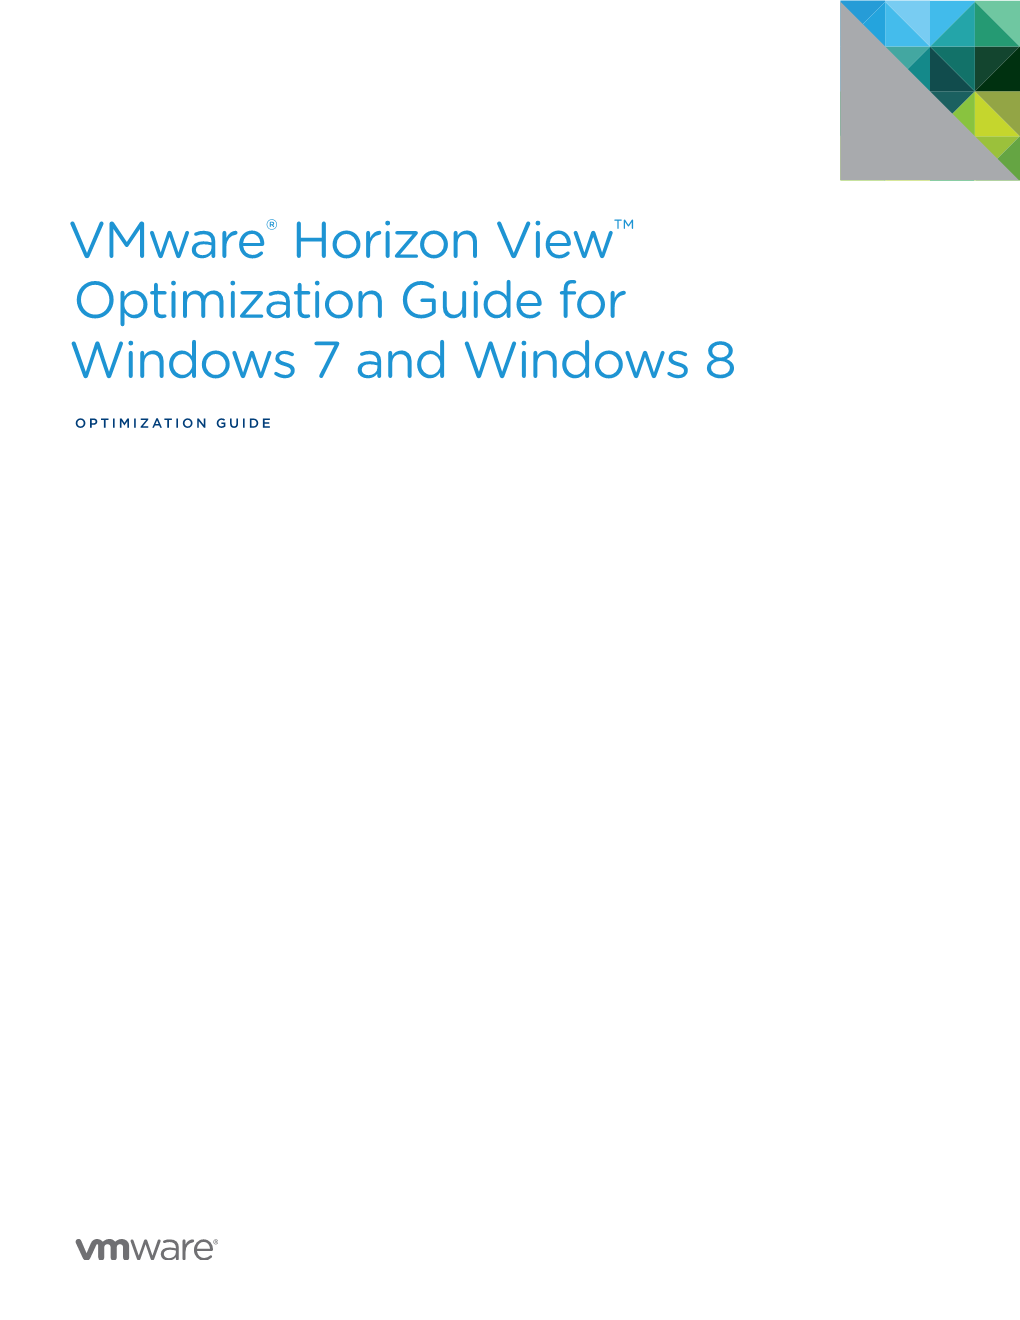 Vmware Horizon View Optimization Guide for Windows 7 and Windows 8